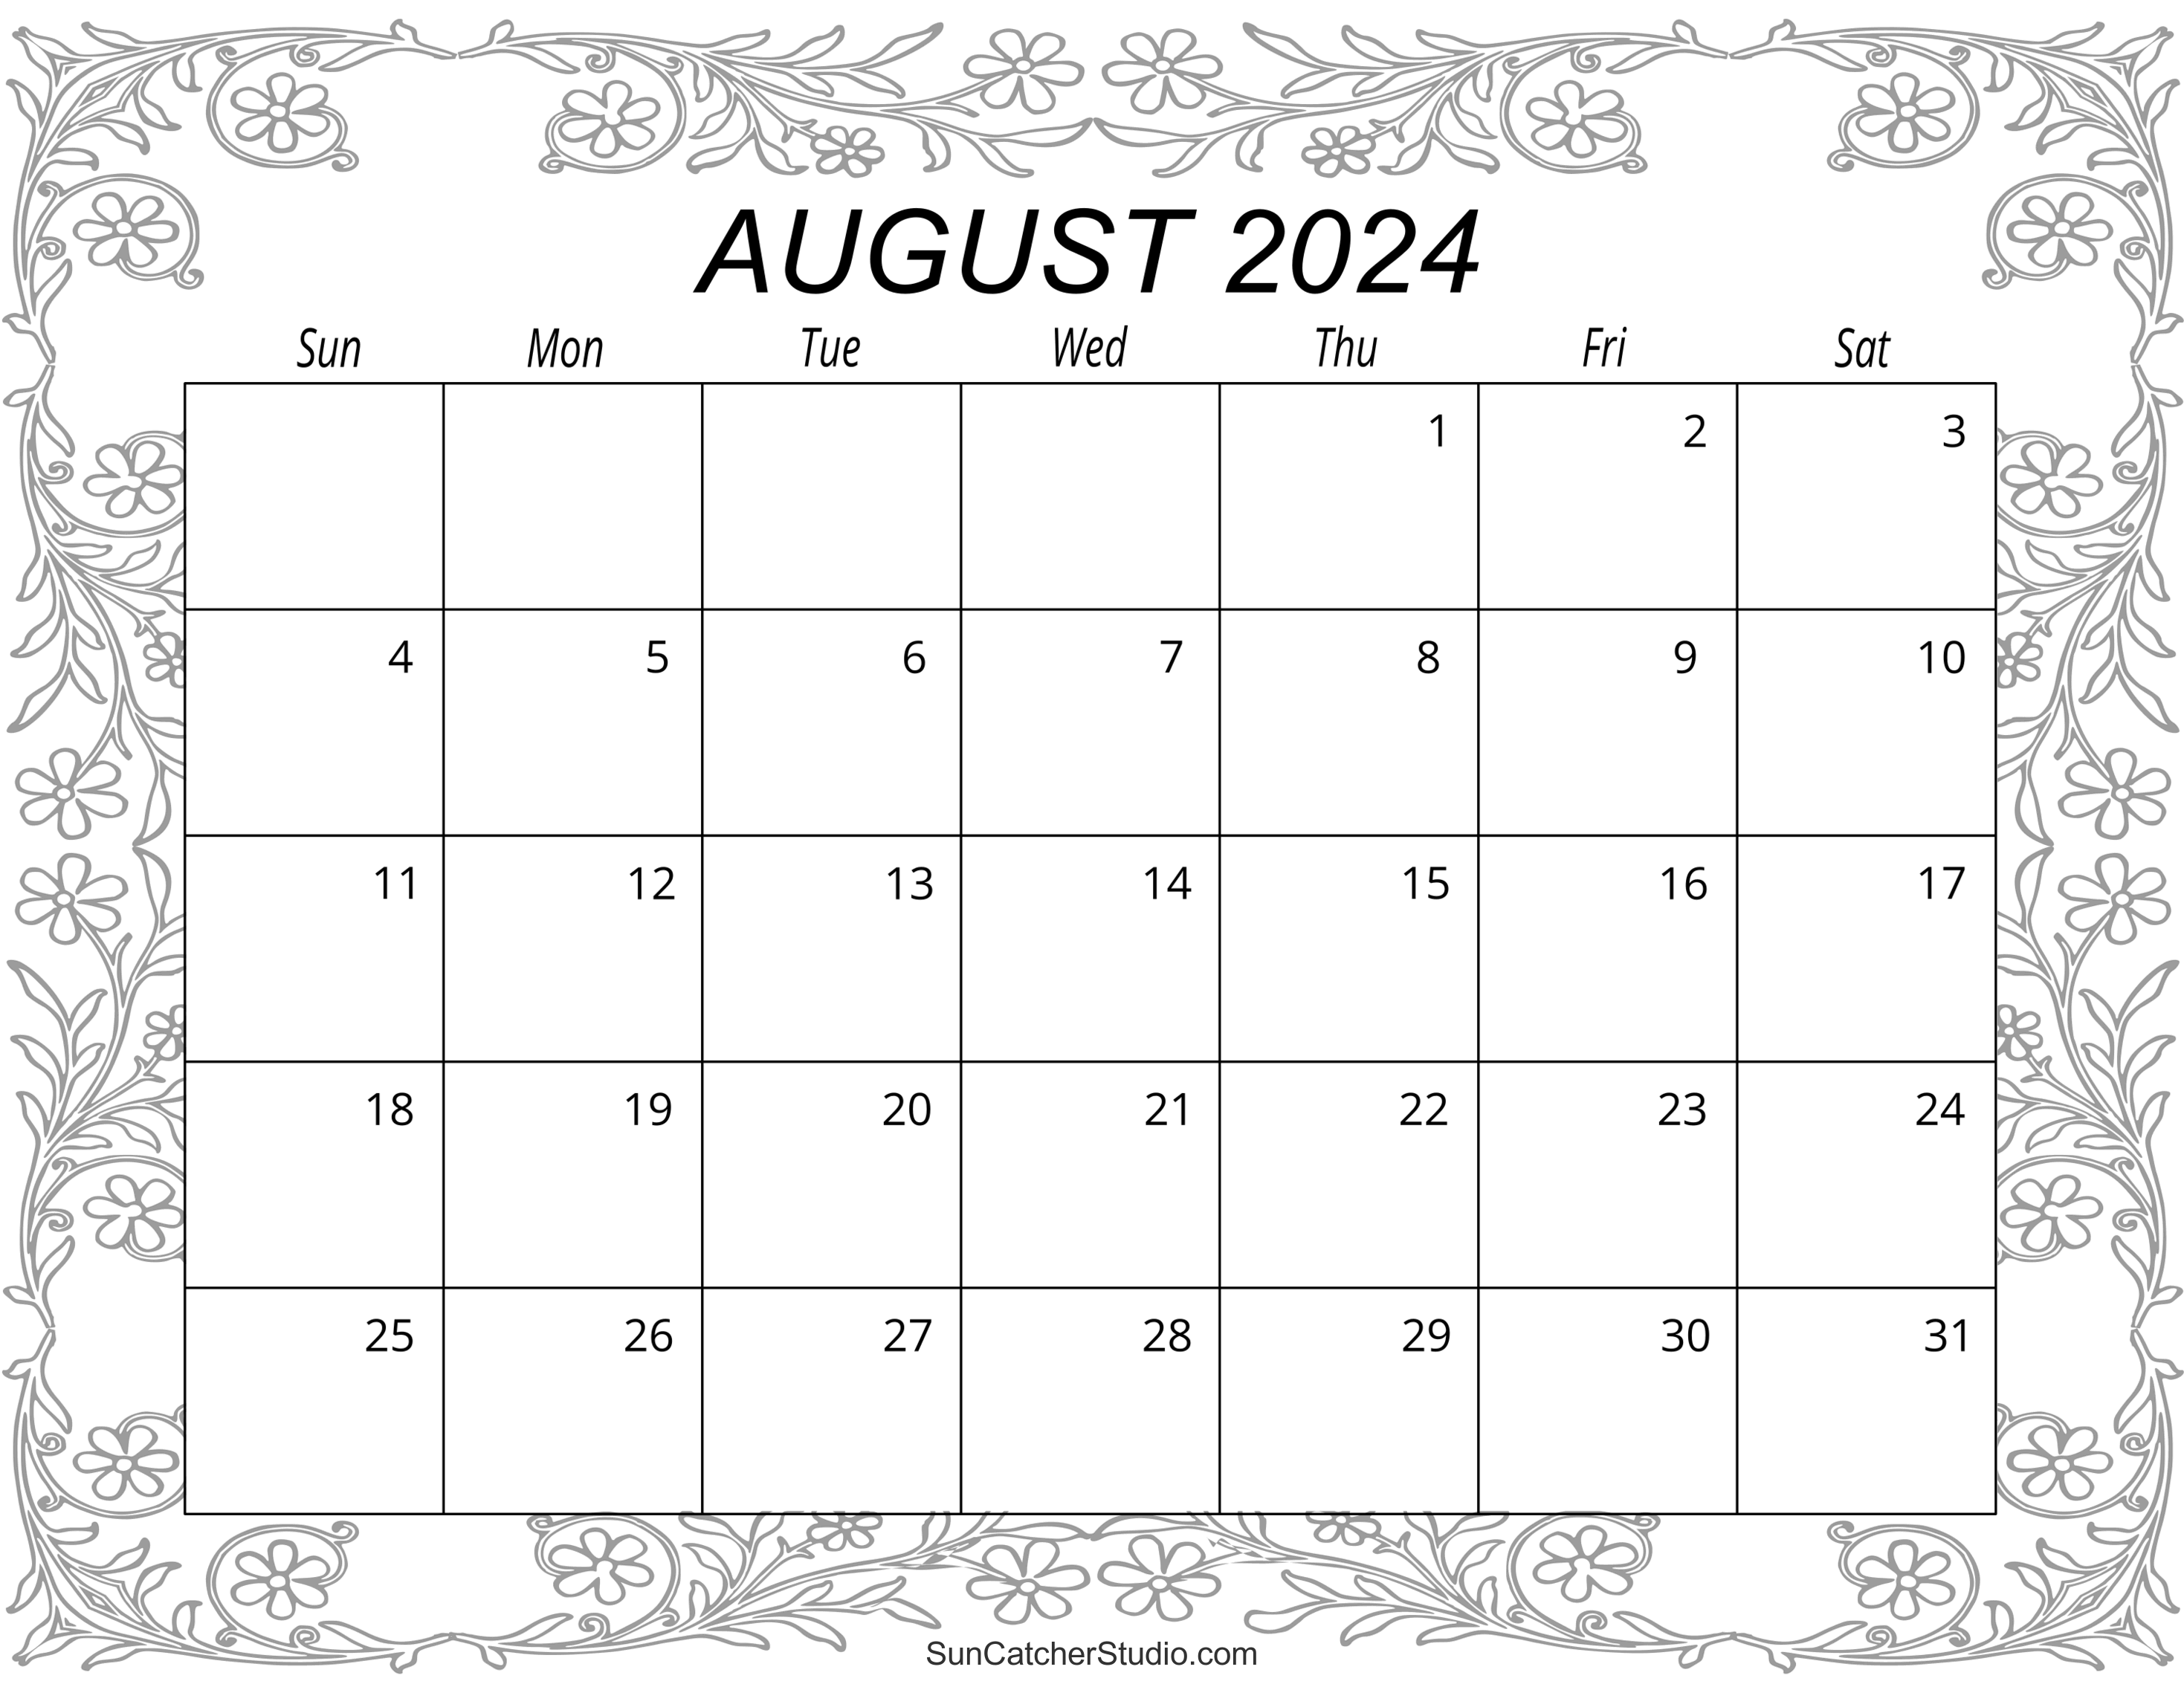 August 2024 Calendar Design Ideas Sydel Fanechka